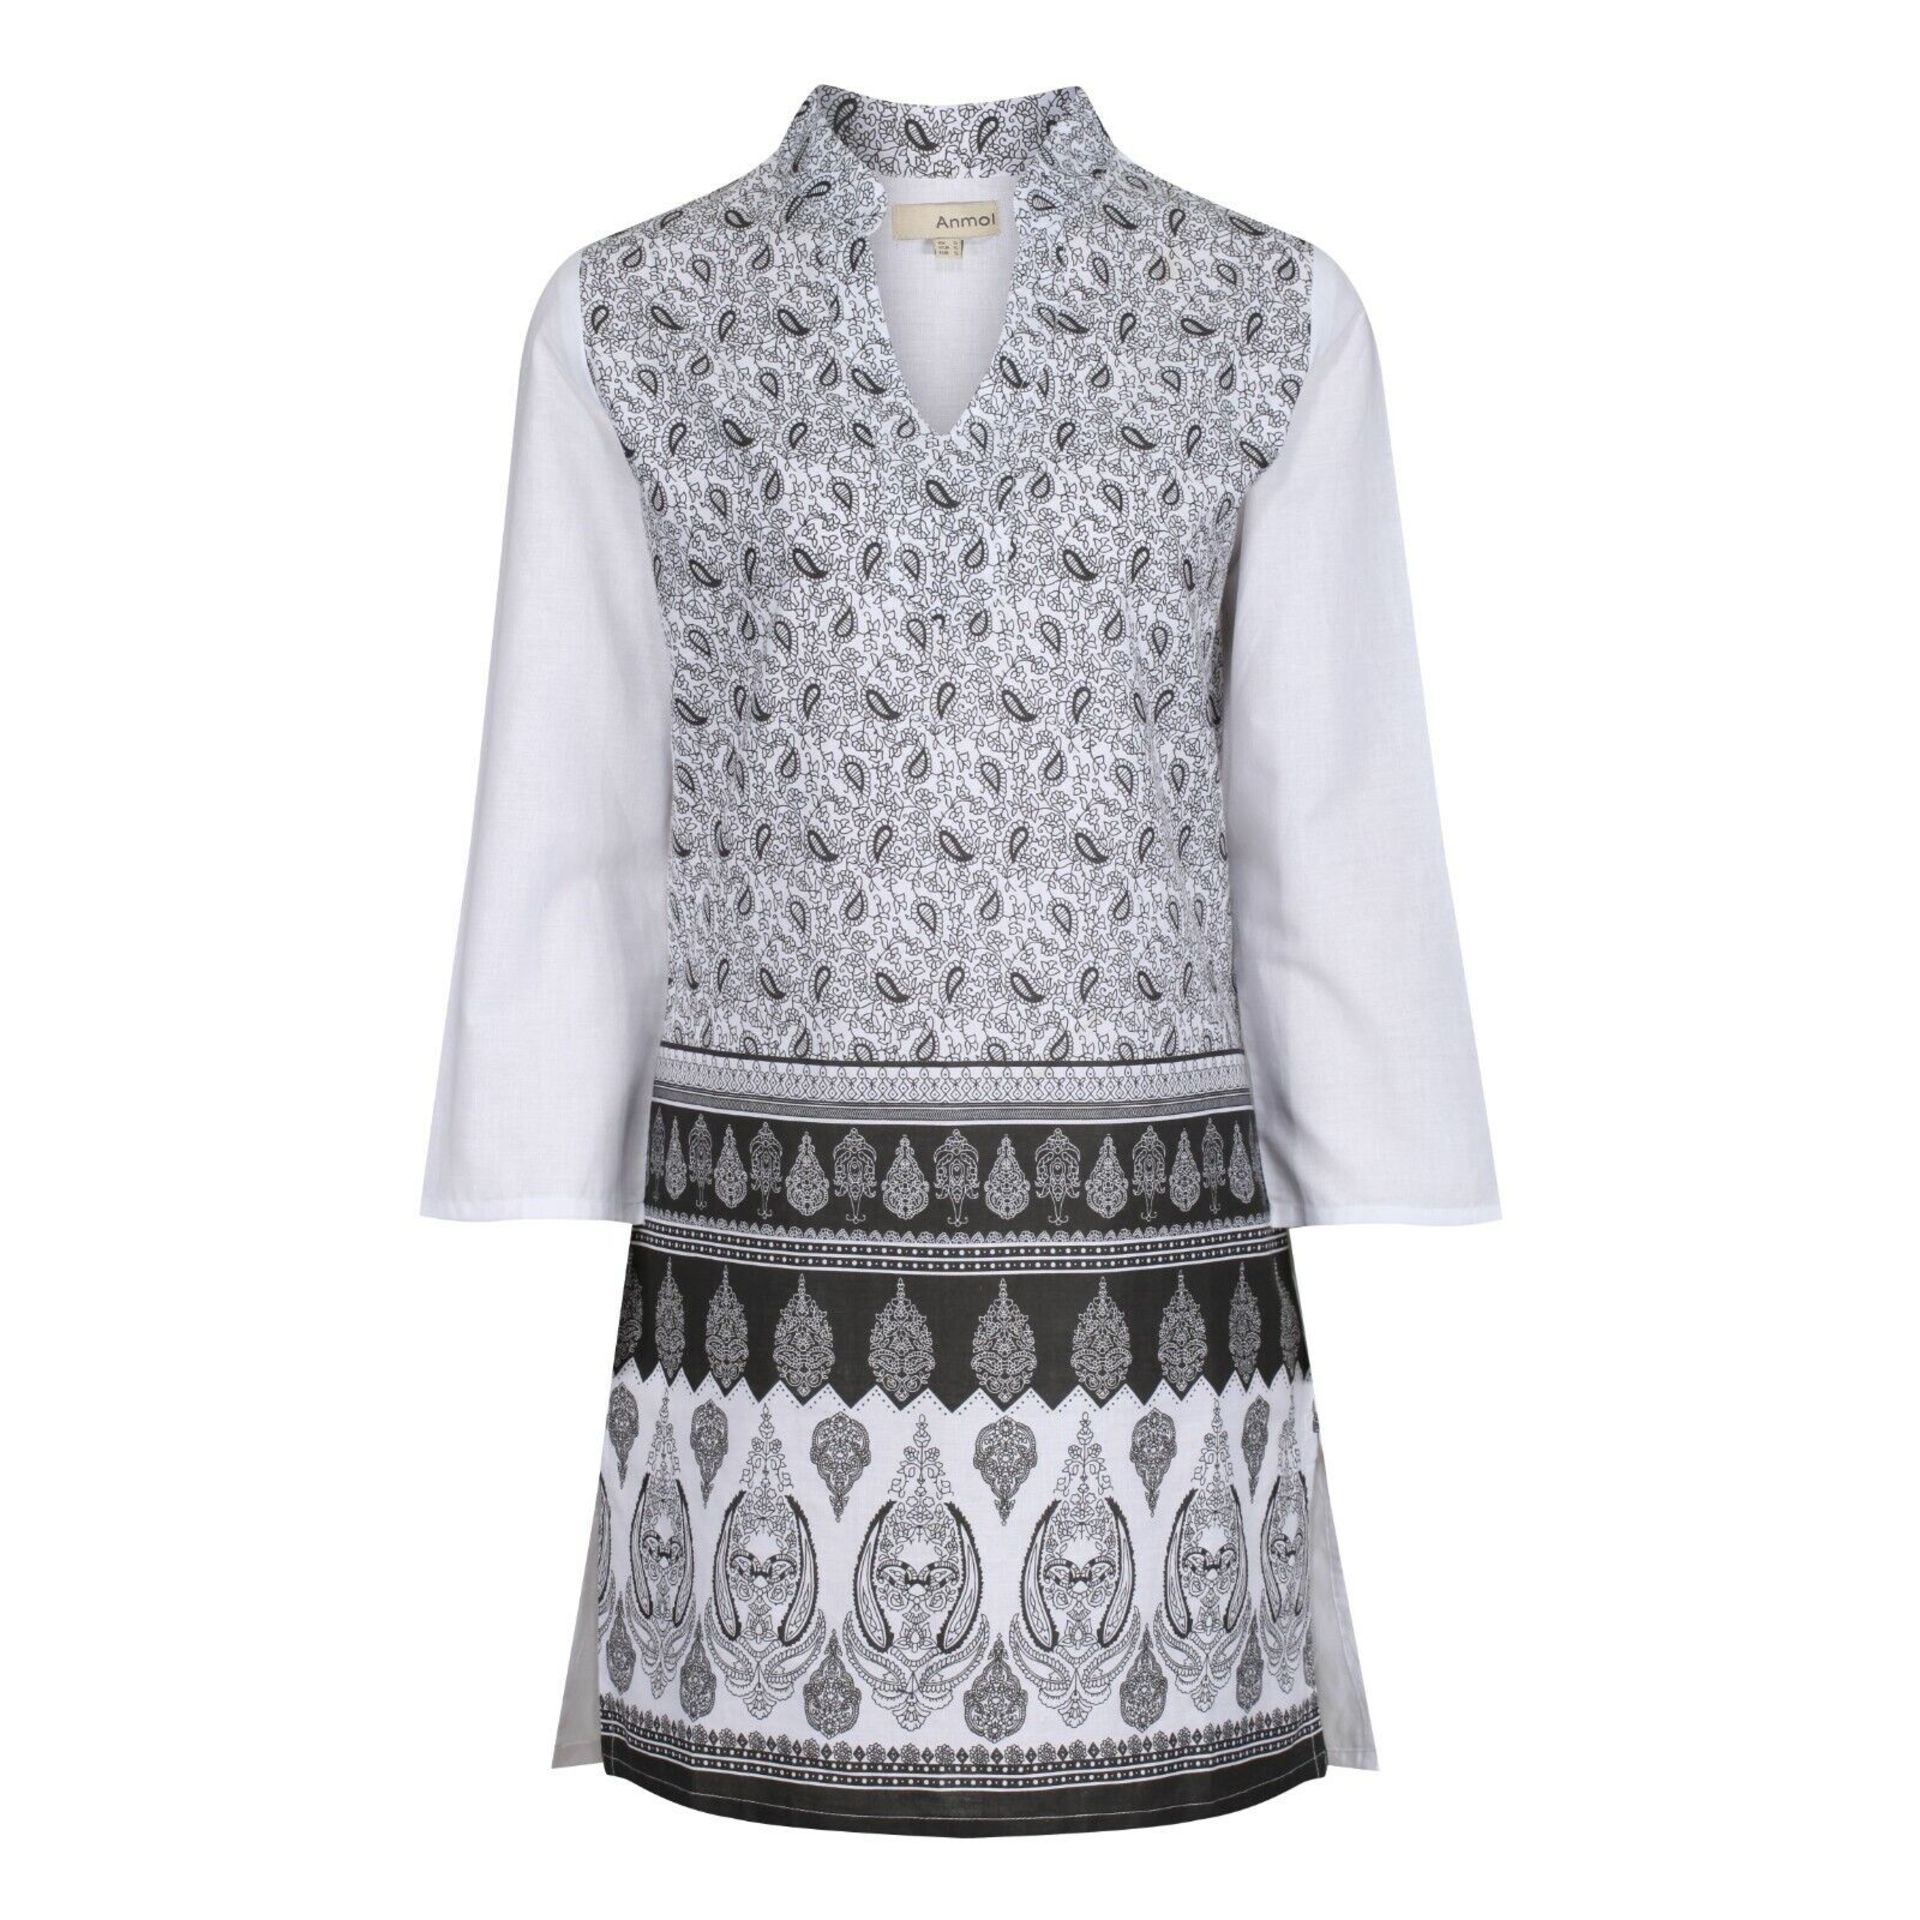 50 x New Women's Cotton Kaftan Tunics Summer Ladieswear Clothing Clothes Fashion - Image 6 of 7